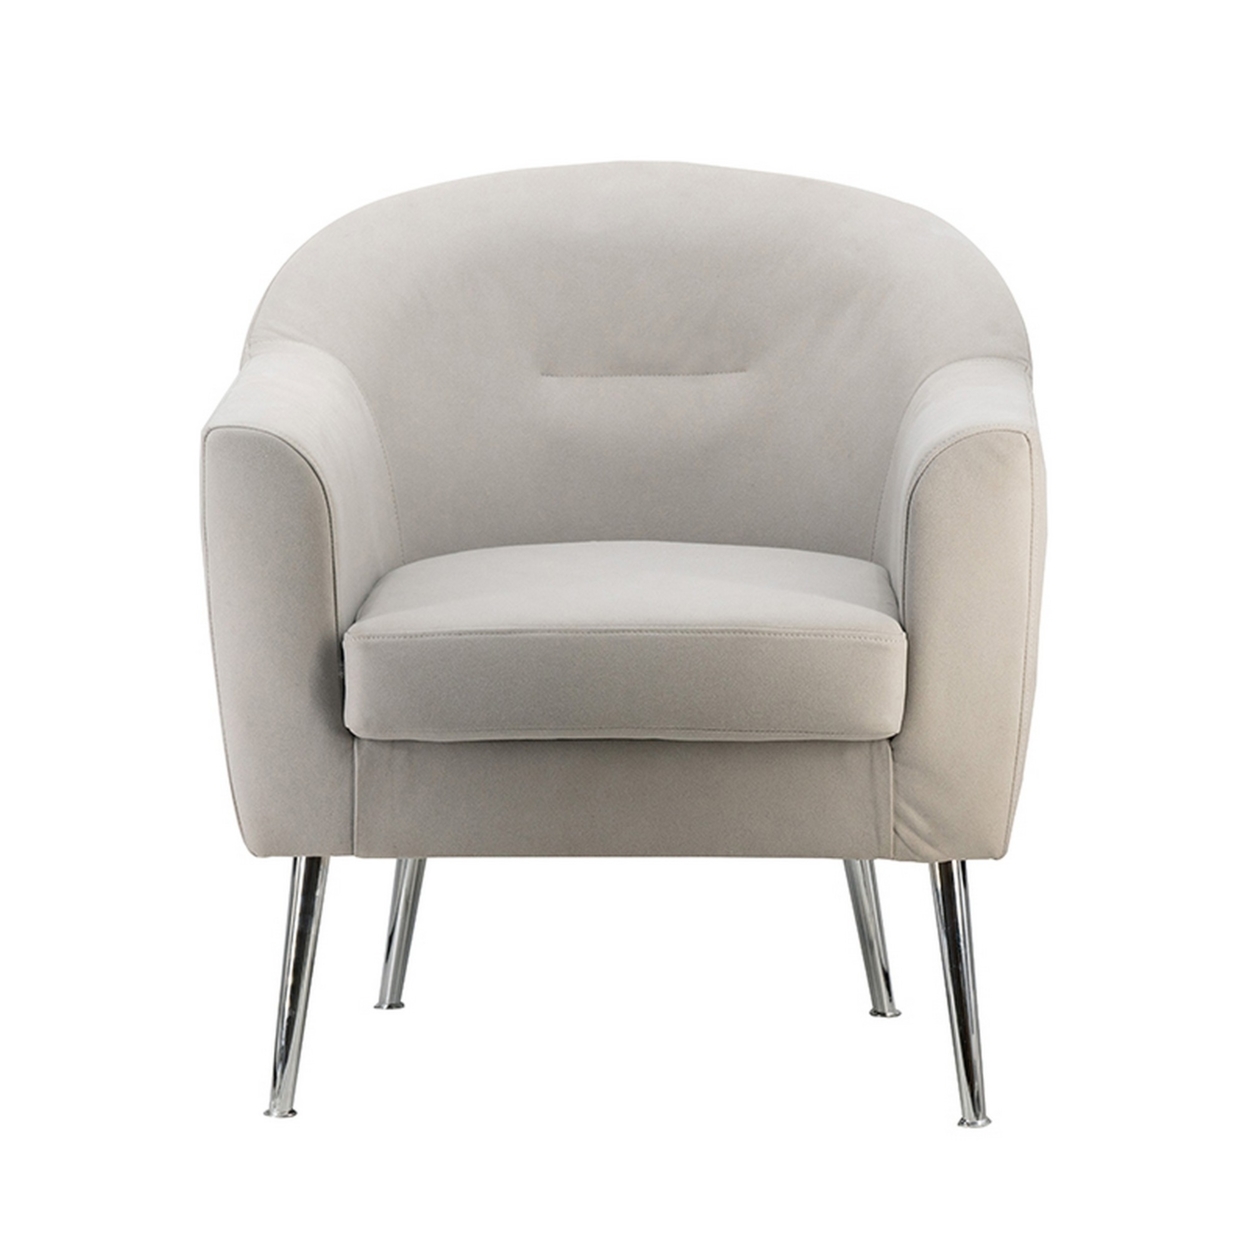 30 Inch Modern Accent Armchair, Fabric Upholstery, Chrome Metal Legs, Ivory- Saltoro Sherpi